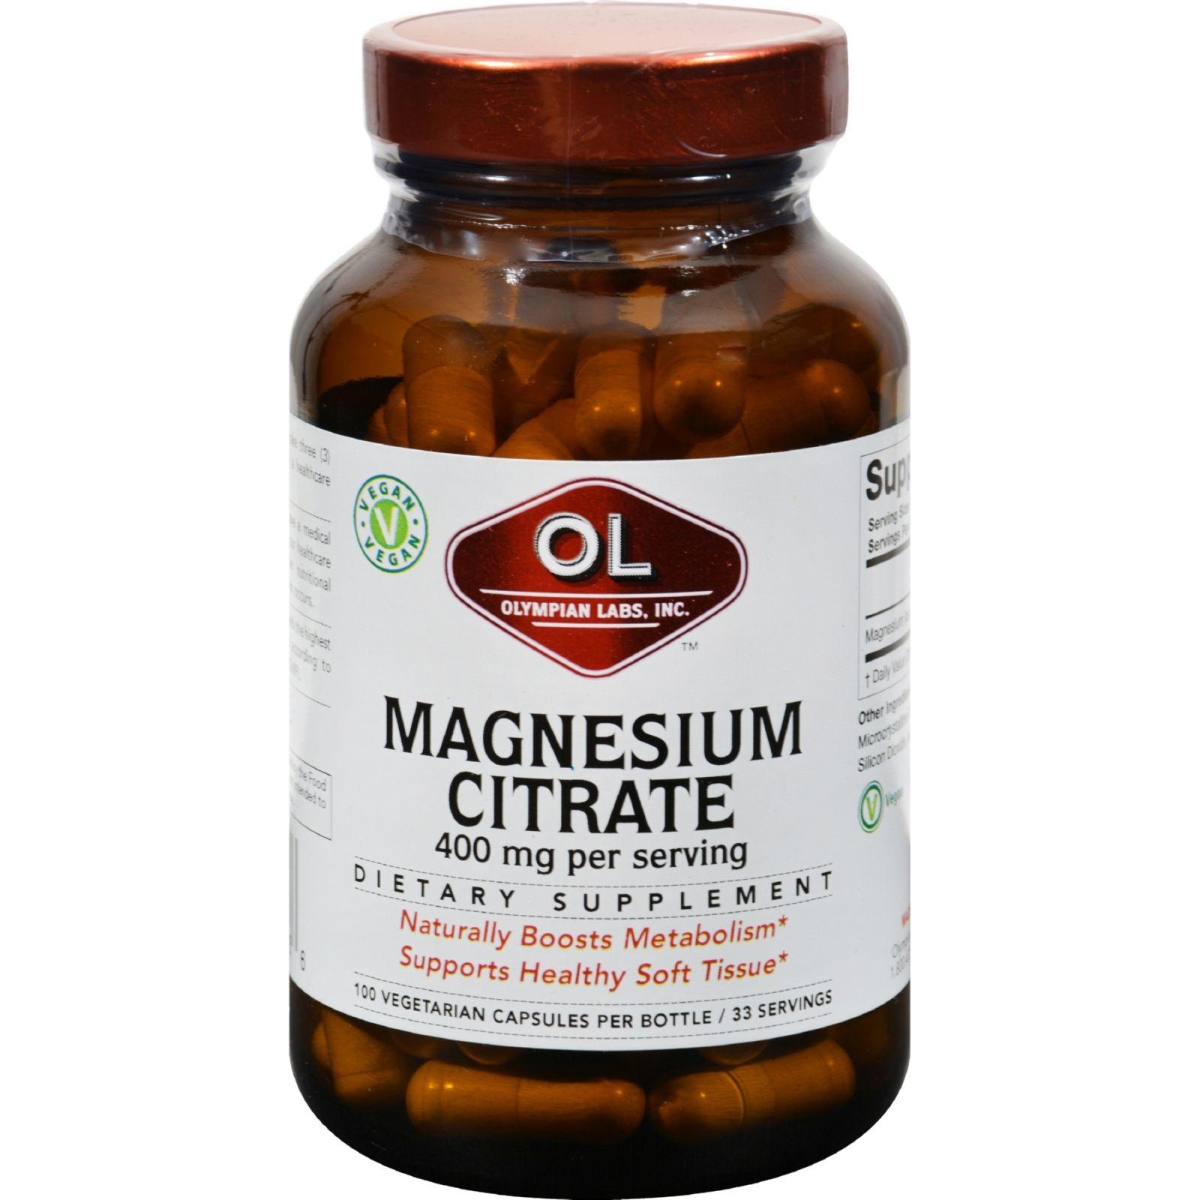 Hg0388942 400 Mg Magnesium Citrate - 100 Capsules